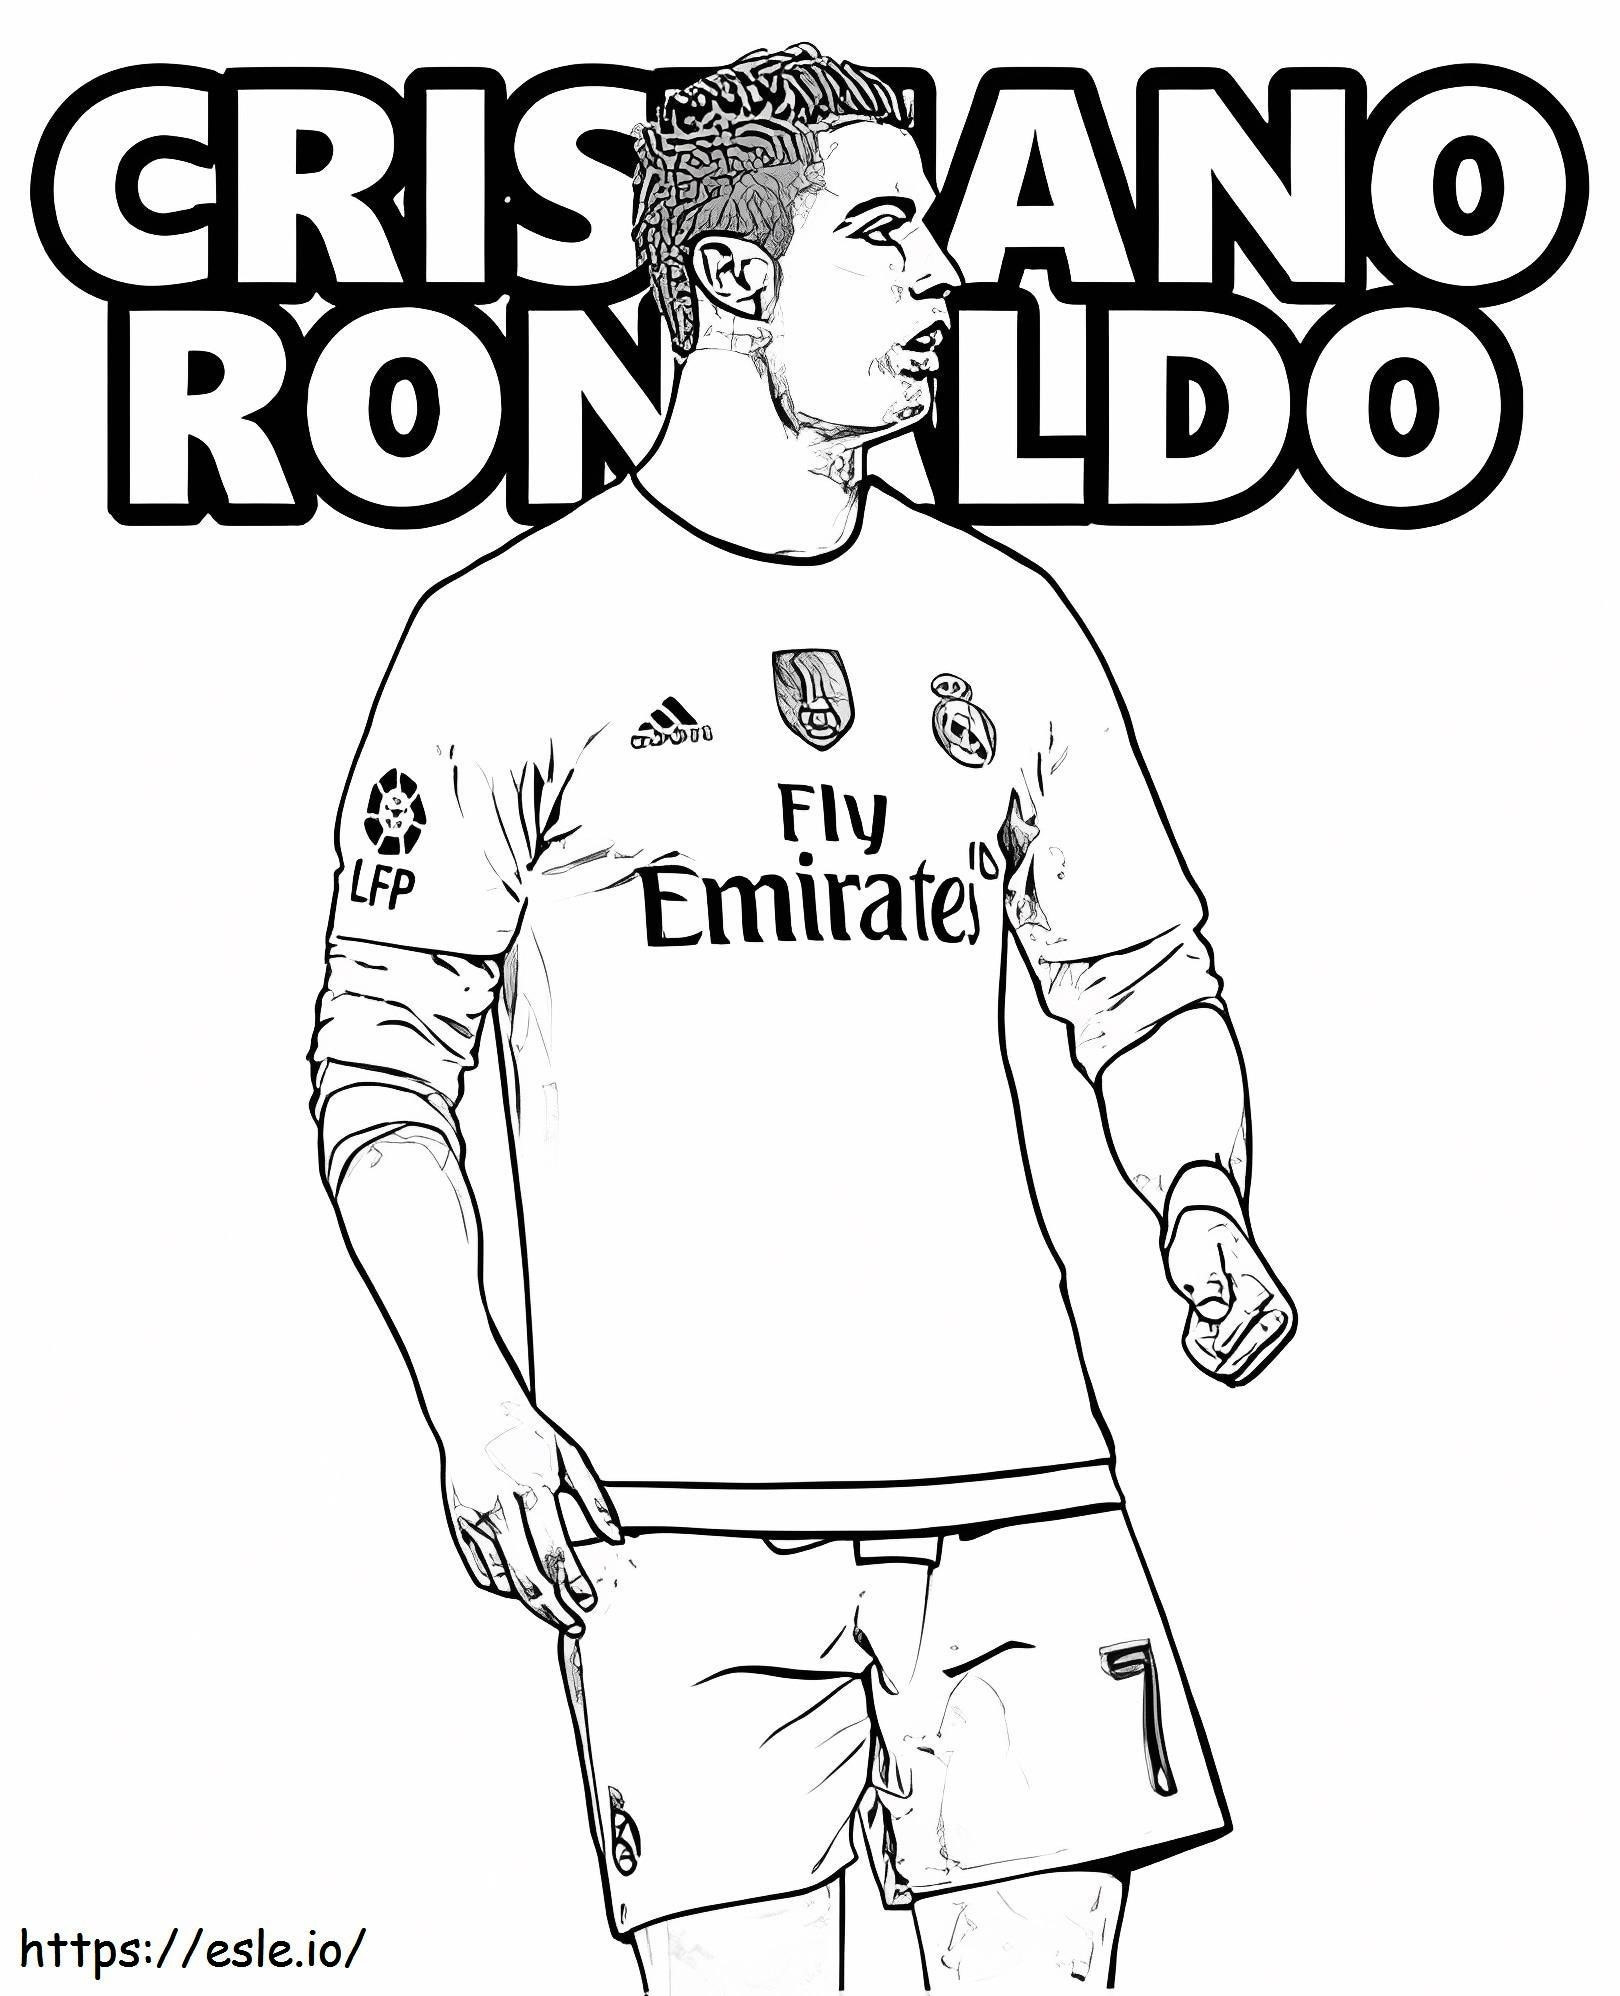 Genial Cristiano Ronaldo de colorat